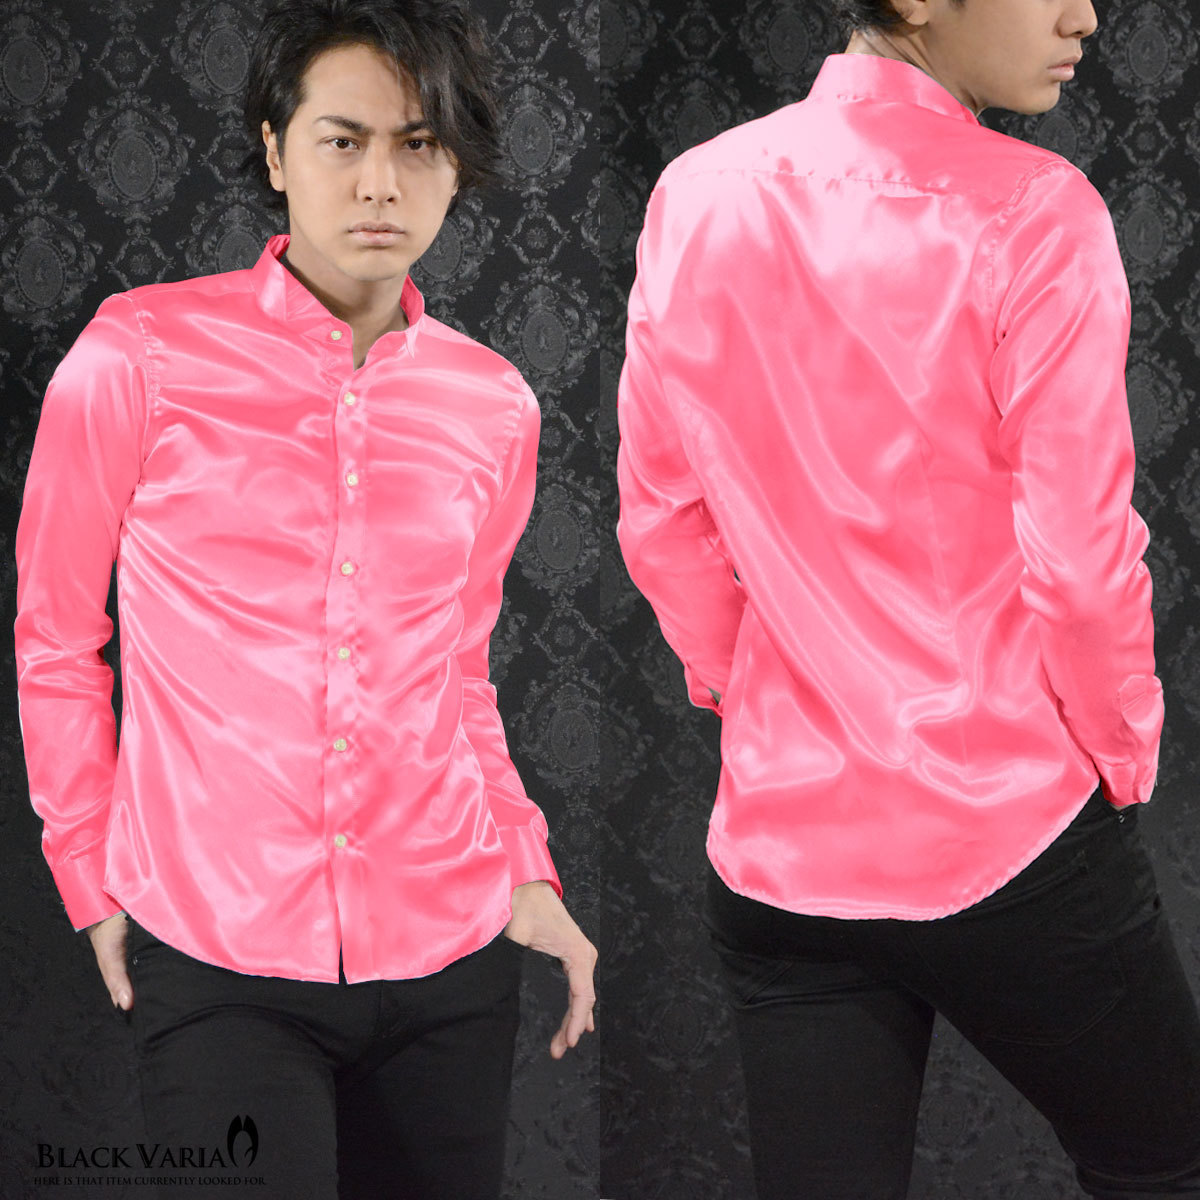 161208-pk [SALE] wing color plain lustre long sleeve costume uniform presentation dress shirt men's made in Japan ( car i knee pink ) SS party 